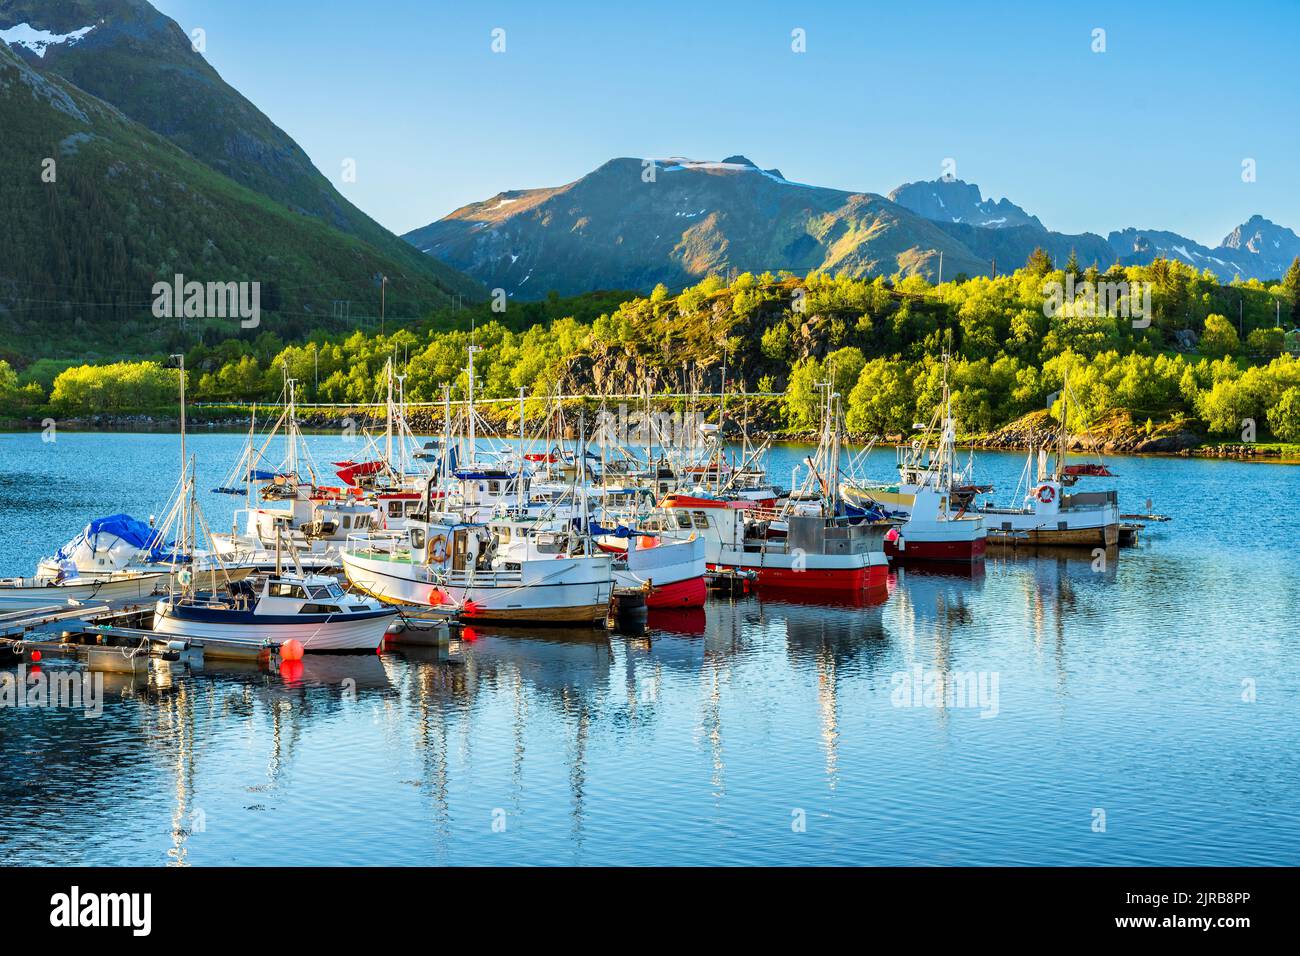 Norwegen, Nordland, Hafen am Ufer des Austnesfjords Stockfoto